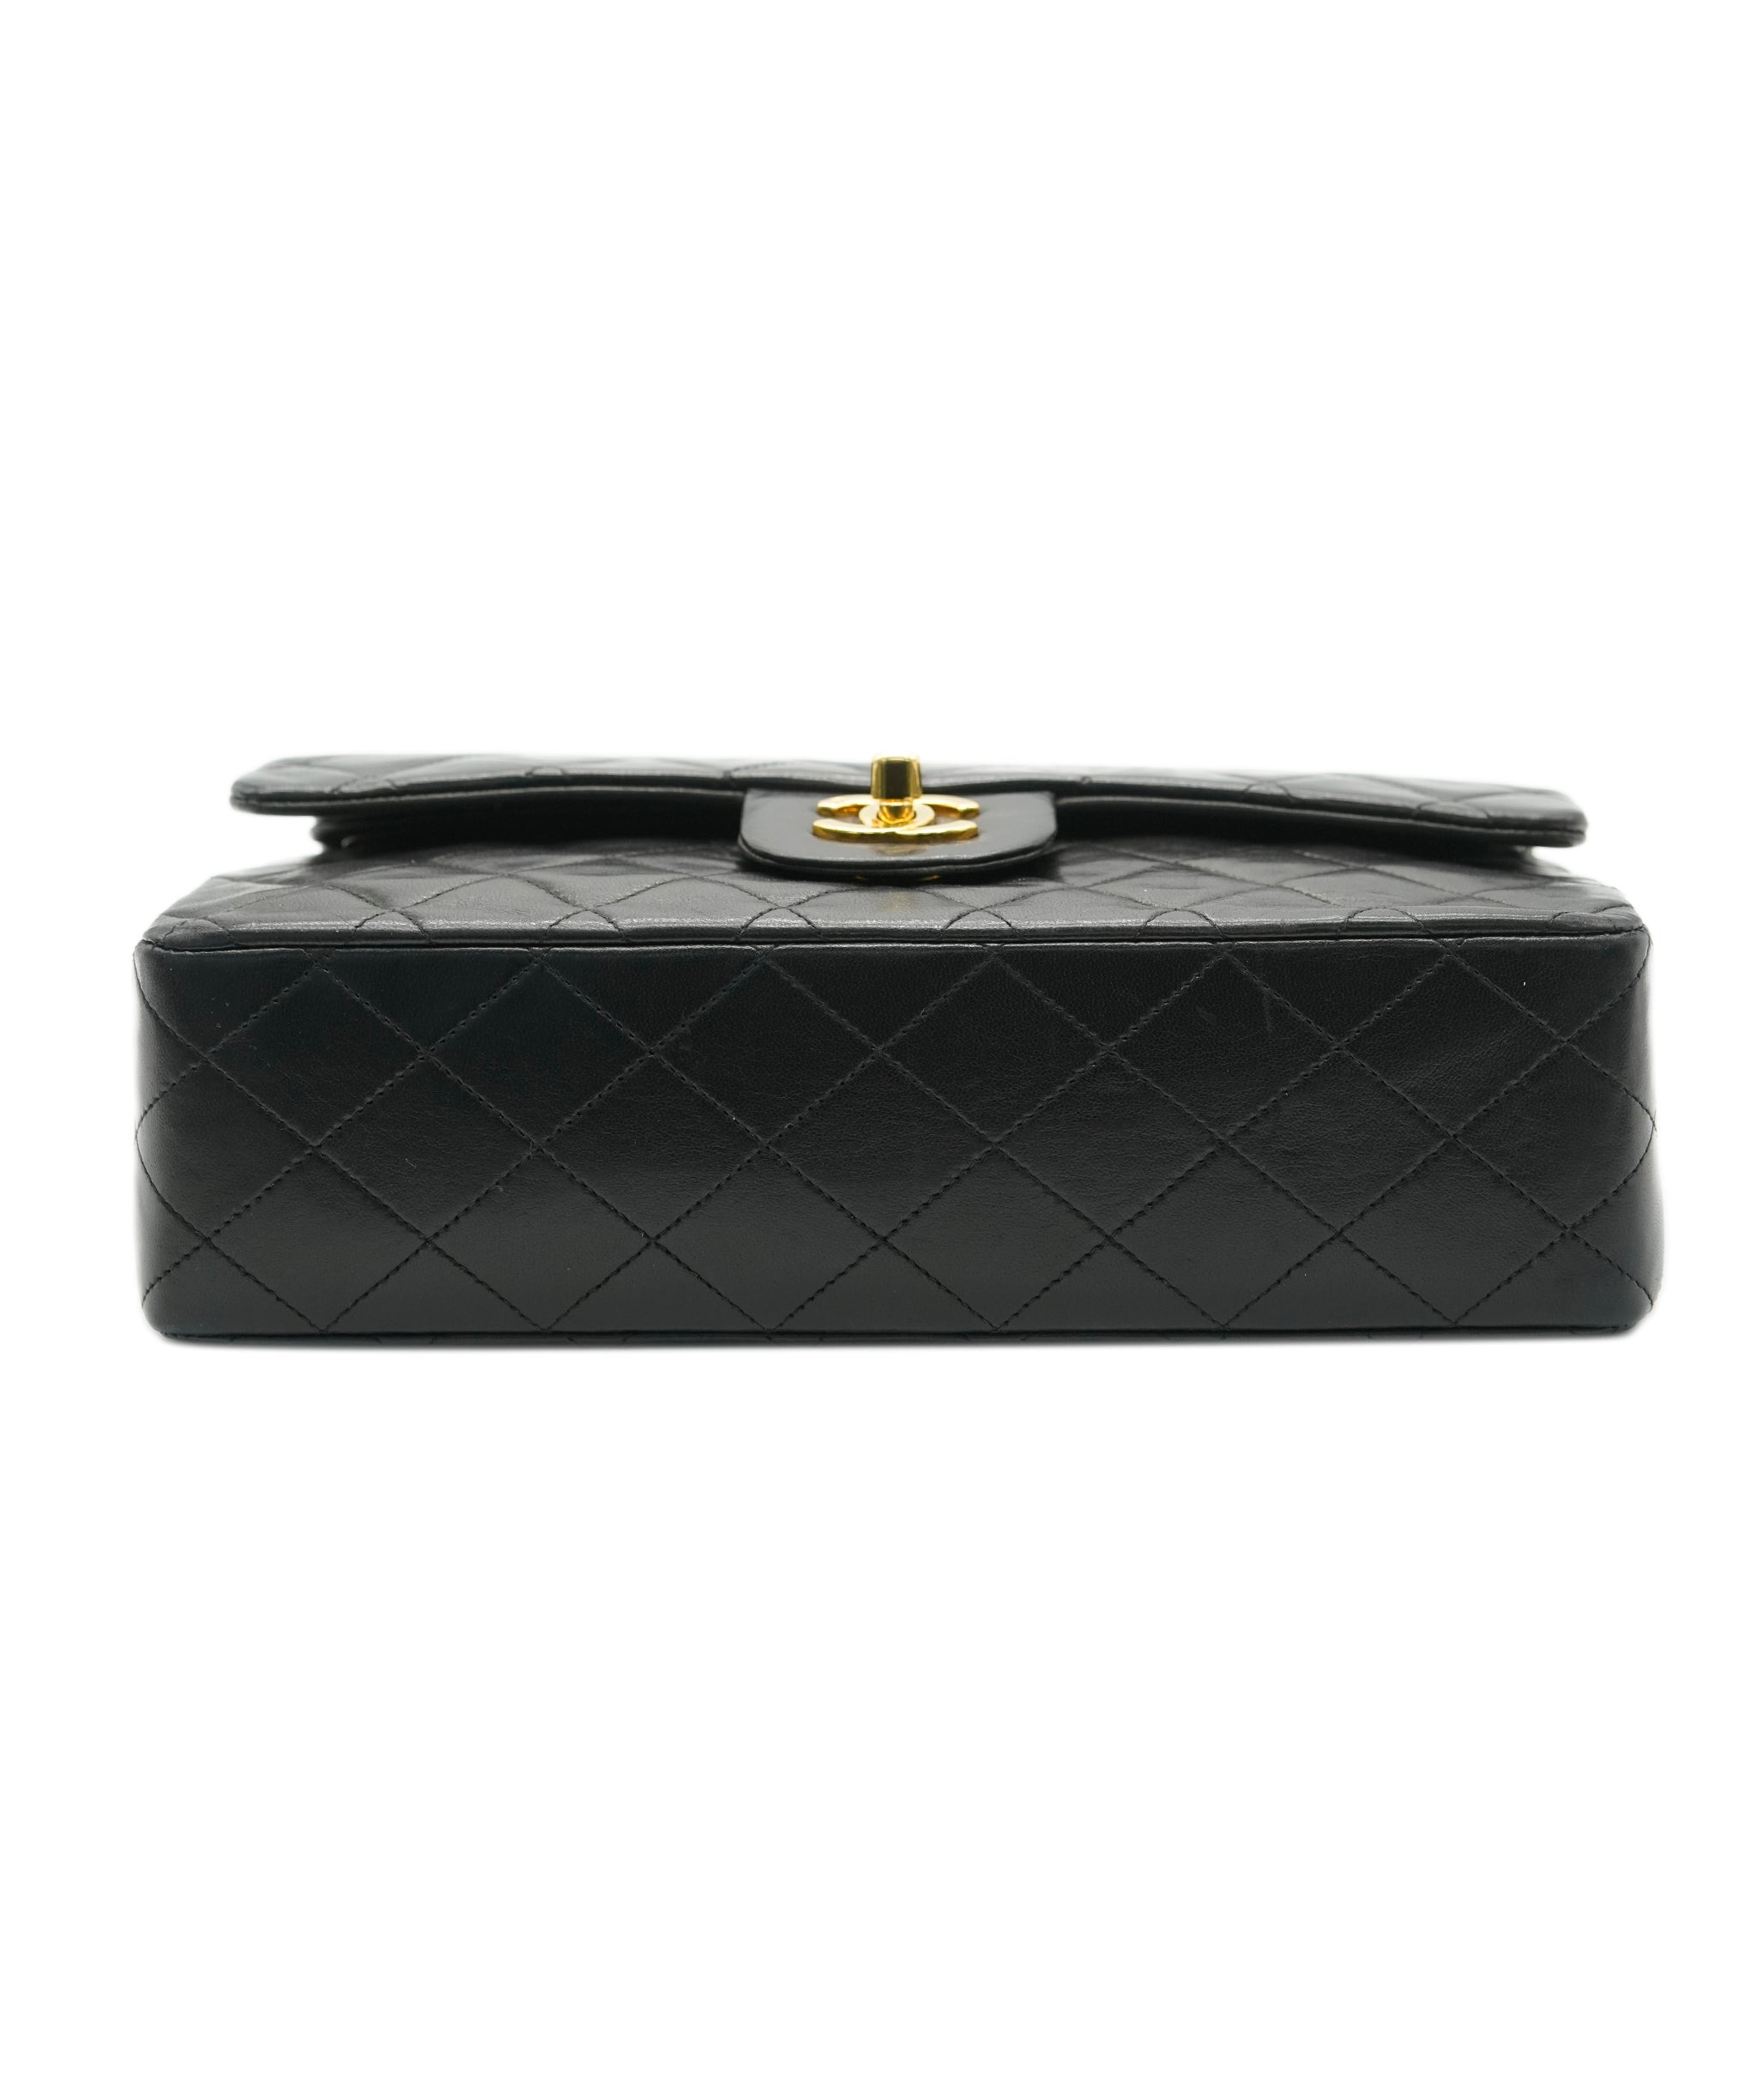 Chanel Chanel Vintage Classic Flap Medium Black Lambskin GHW #3 ASL10546